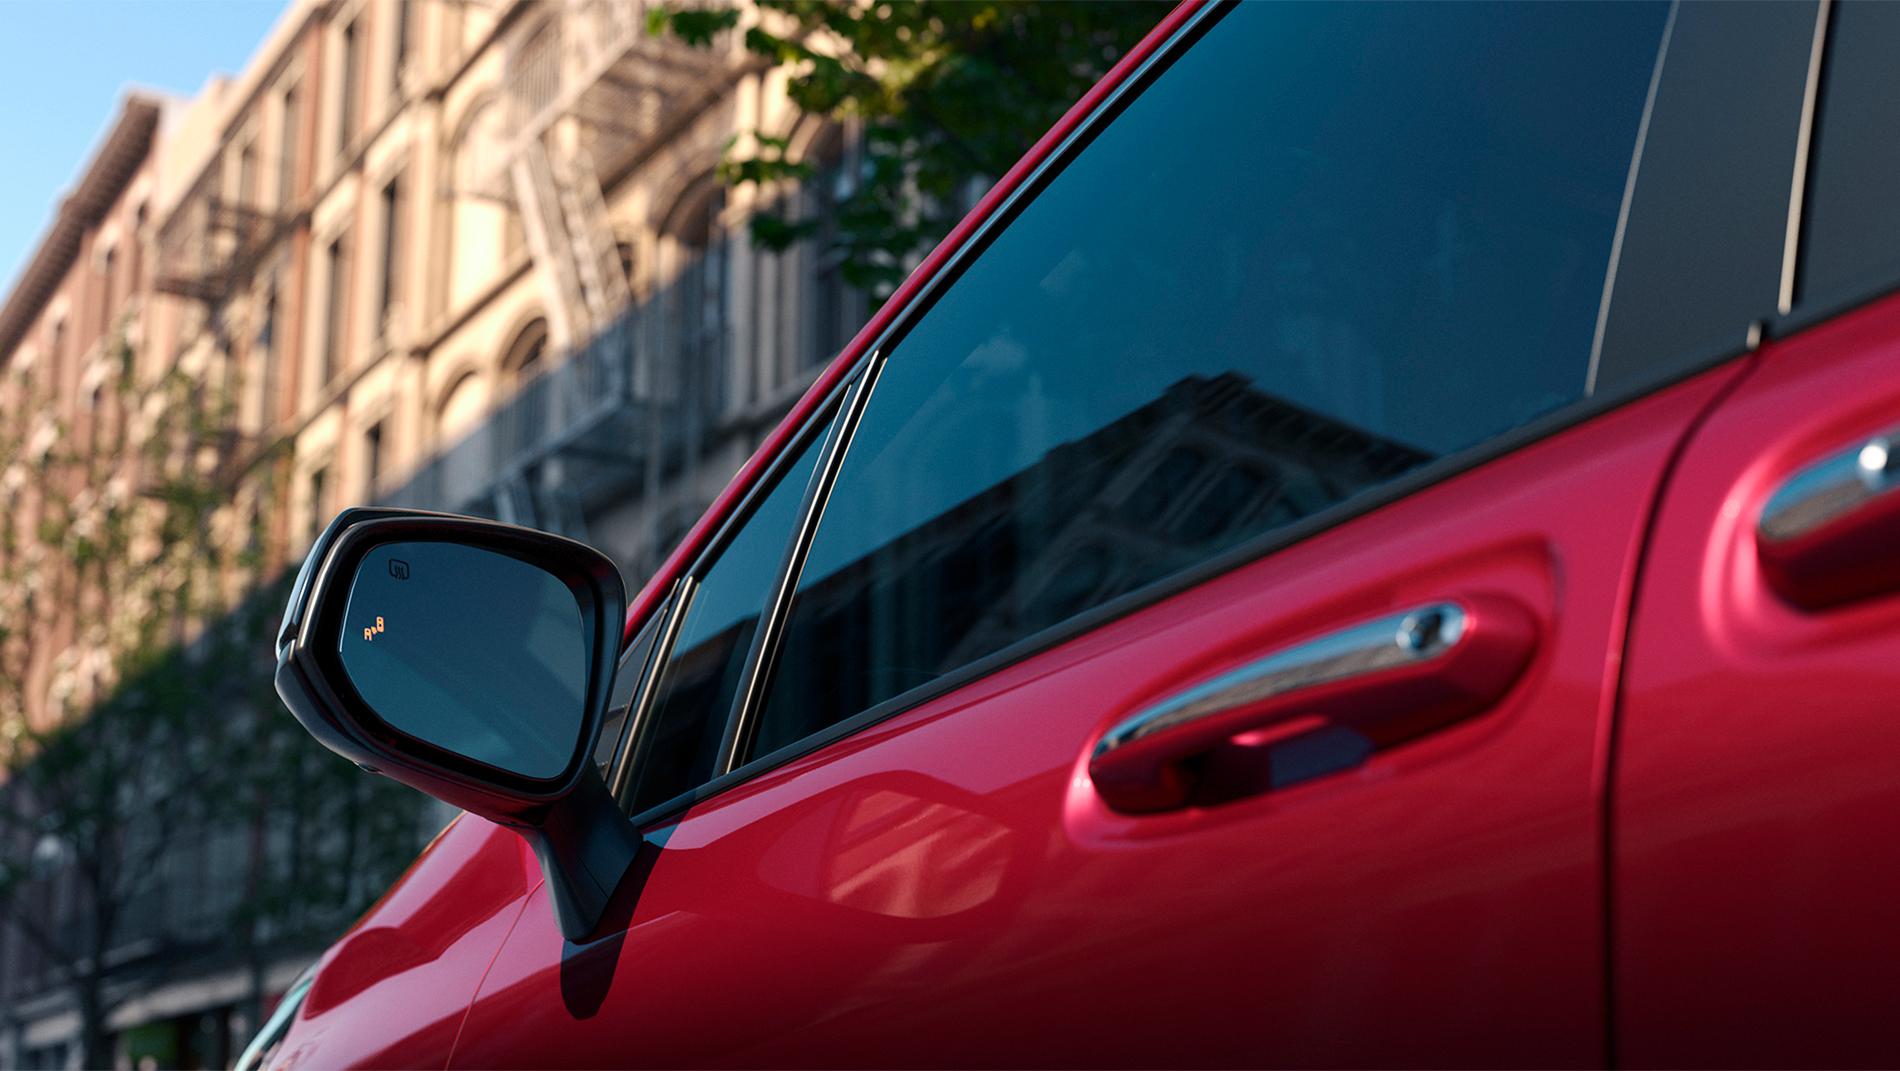 Toyota Sienna Blind Spot Monitor With Rear Cross-Traffic Alert